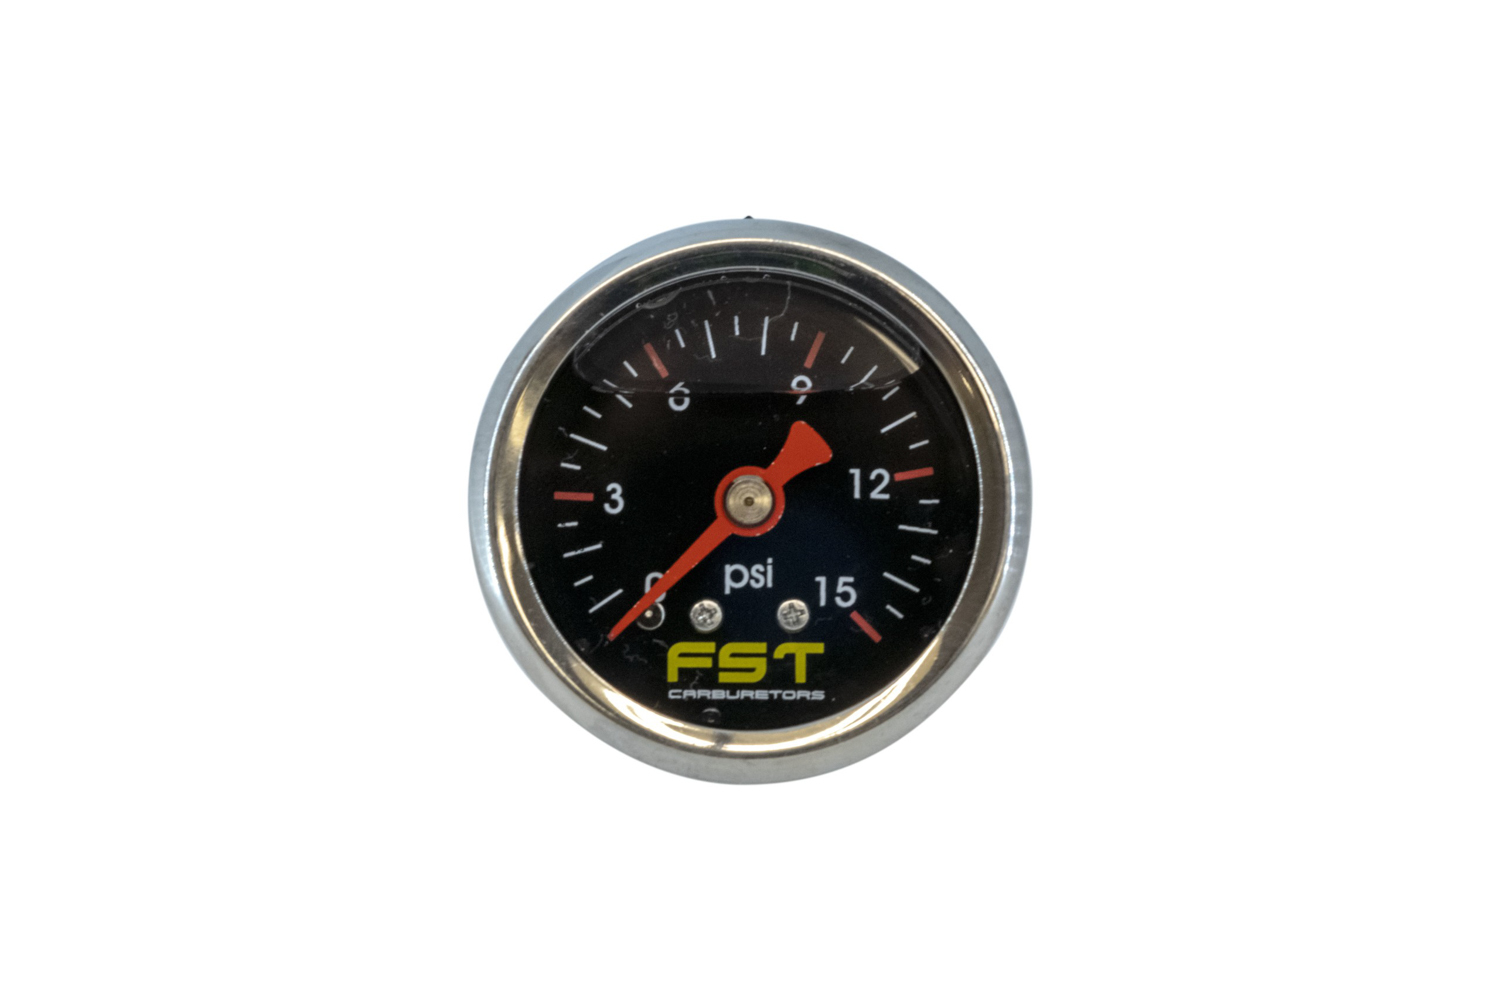 FST Carburetor 49161 - Fuel Pressure Gauge, 0-15 psi, Mechanical, Analog, 1-1/2 in Diameter, Liquid Filled, Black Face, Each